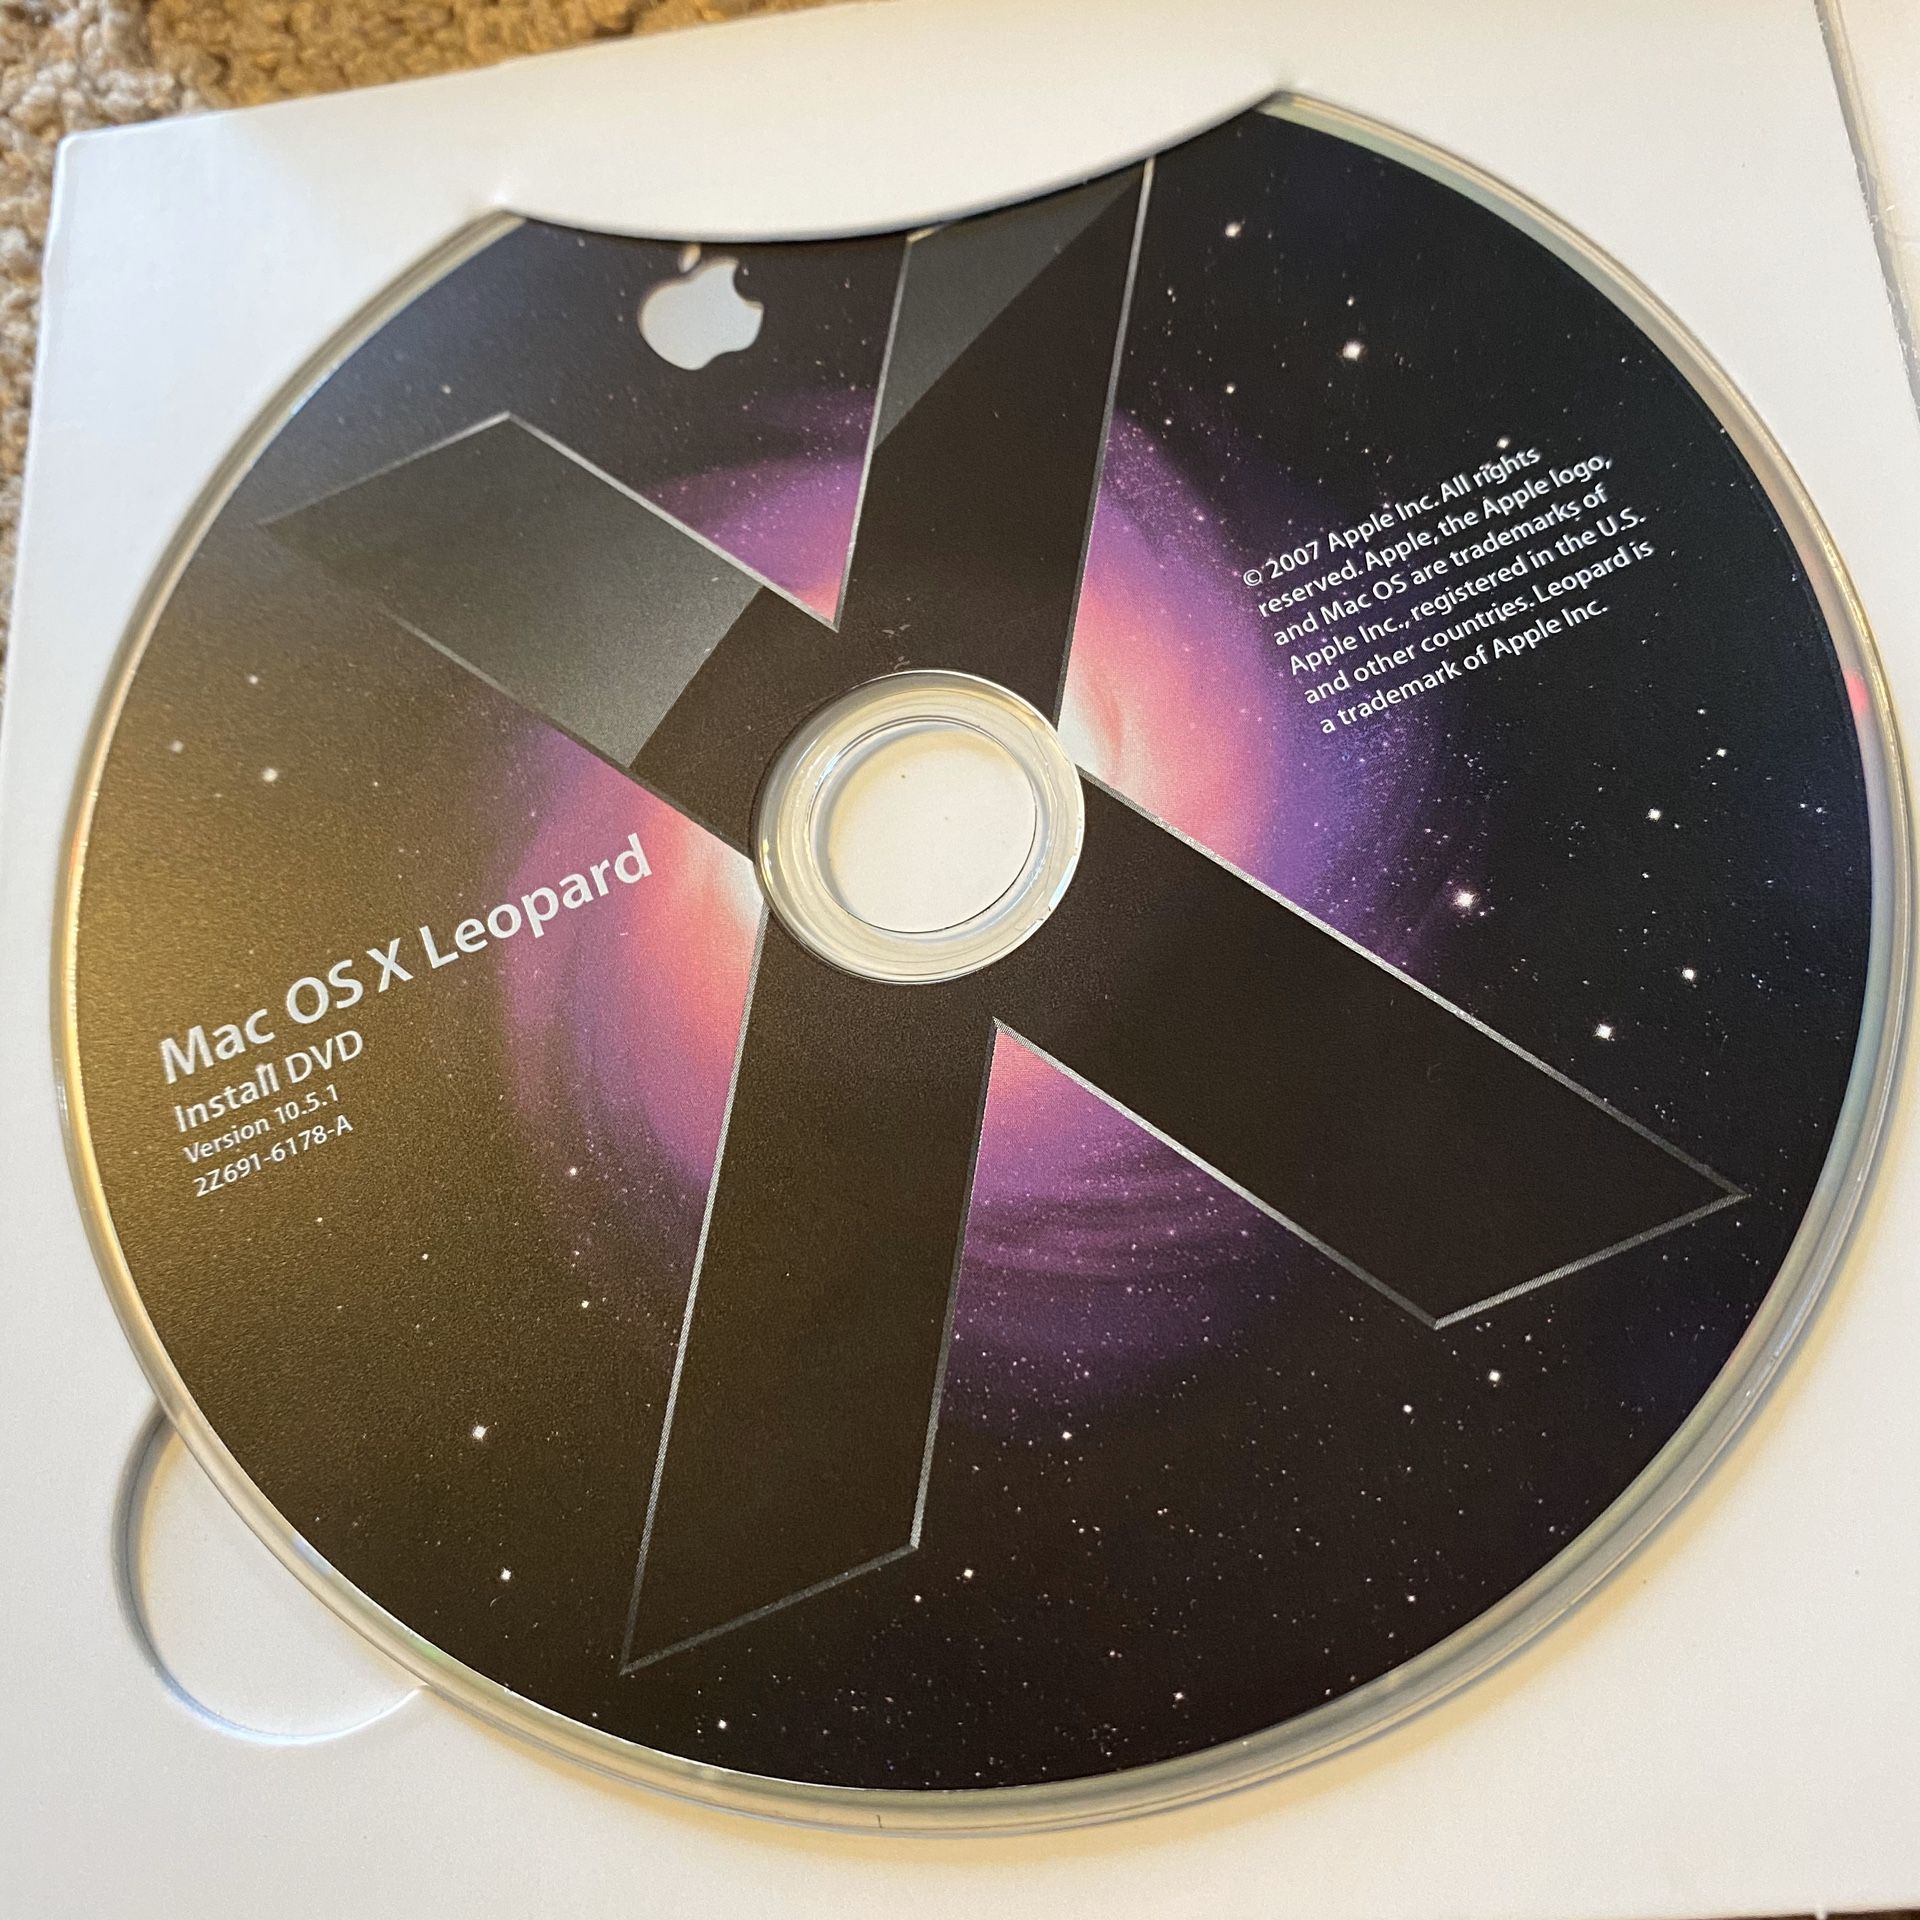 2007 Macintosh Mac OS X Leopard Version